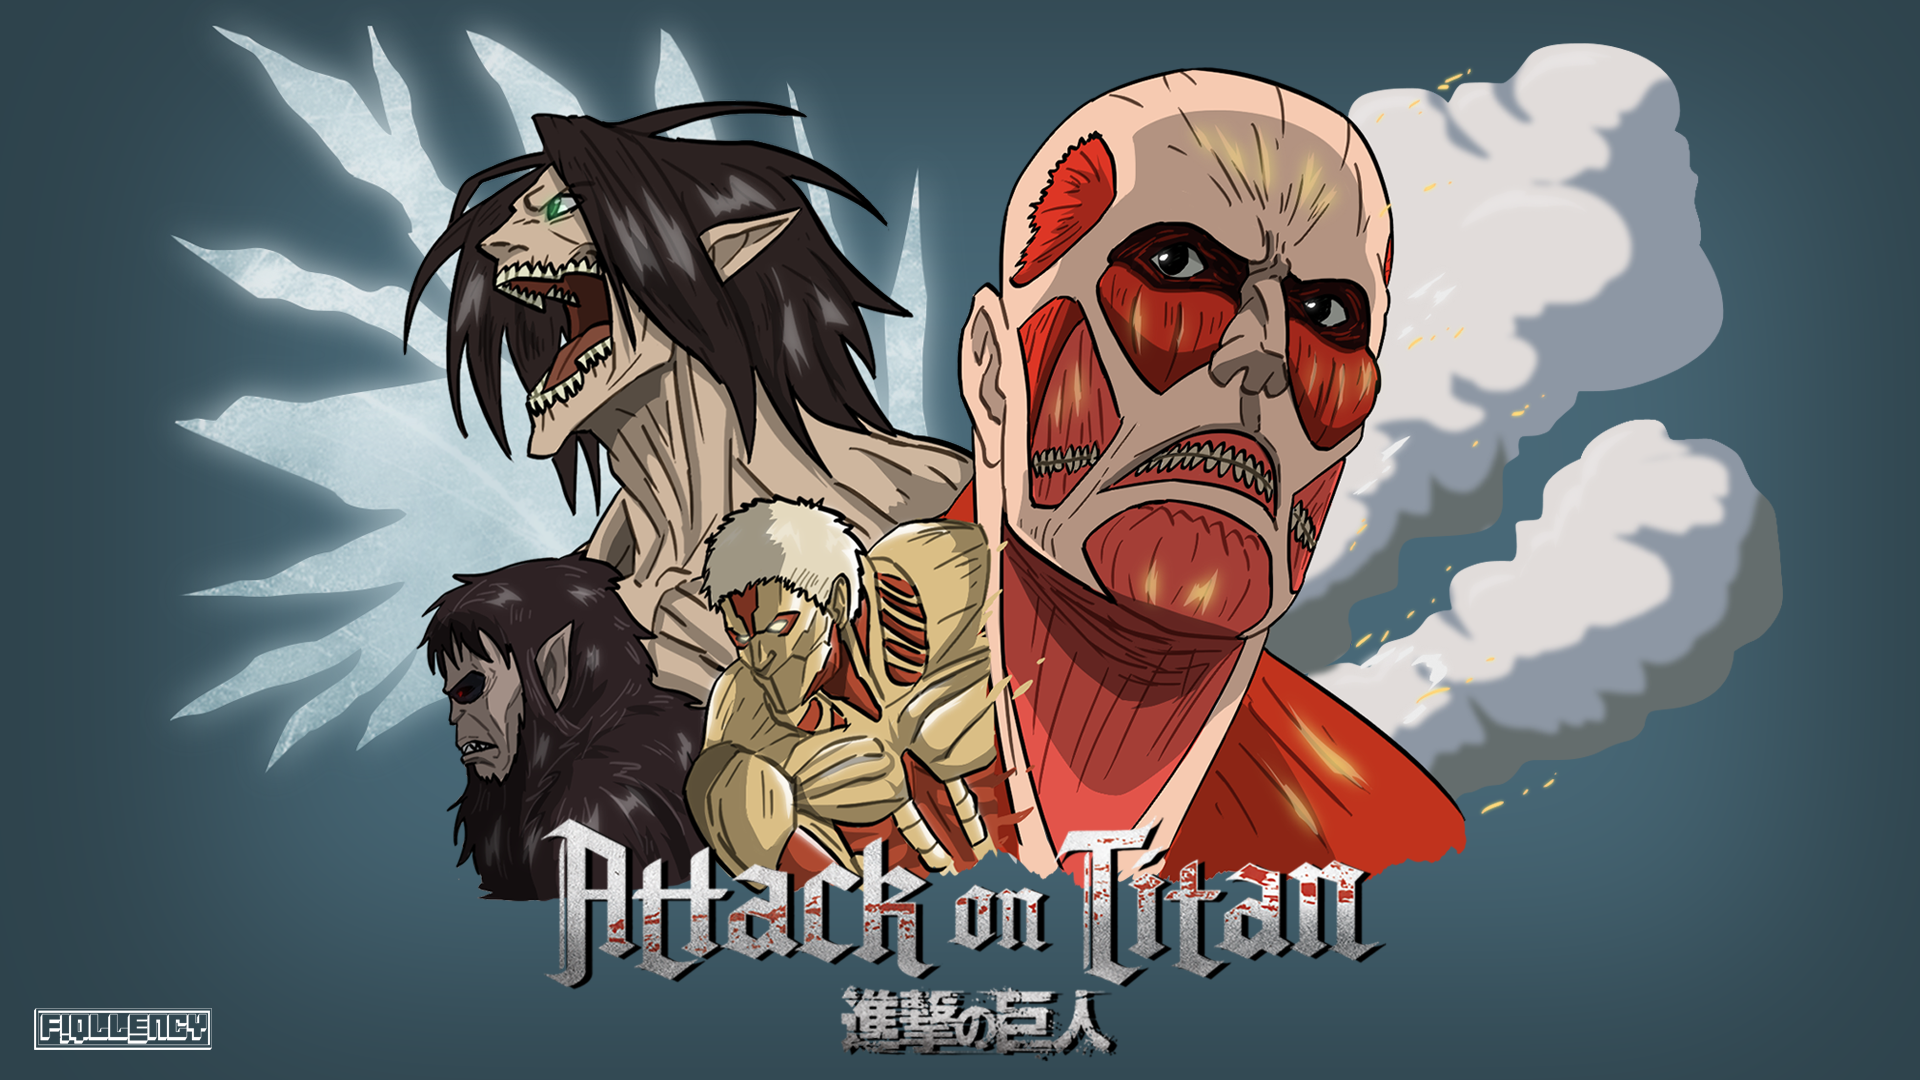 Ver Attack on Titan The Final Season Part 2 (HD) by HiGuys920 on DeviantArt